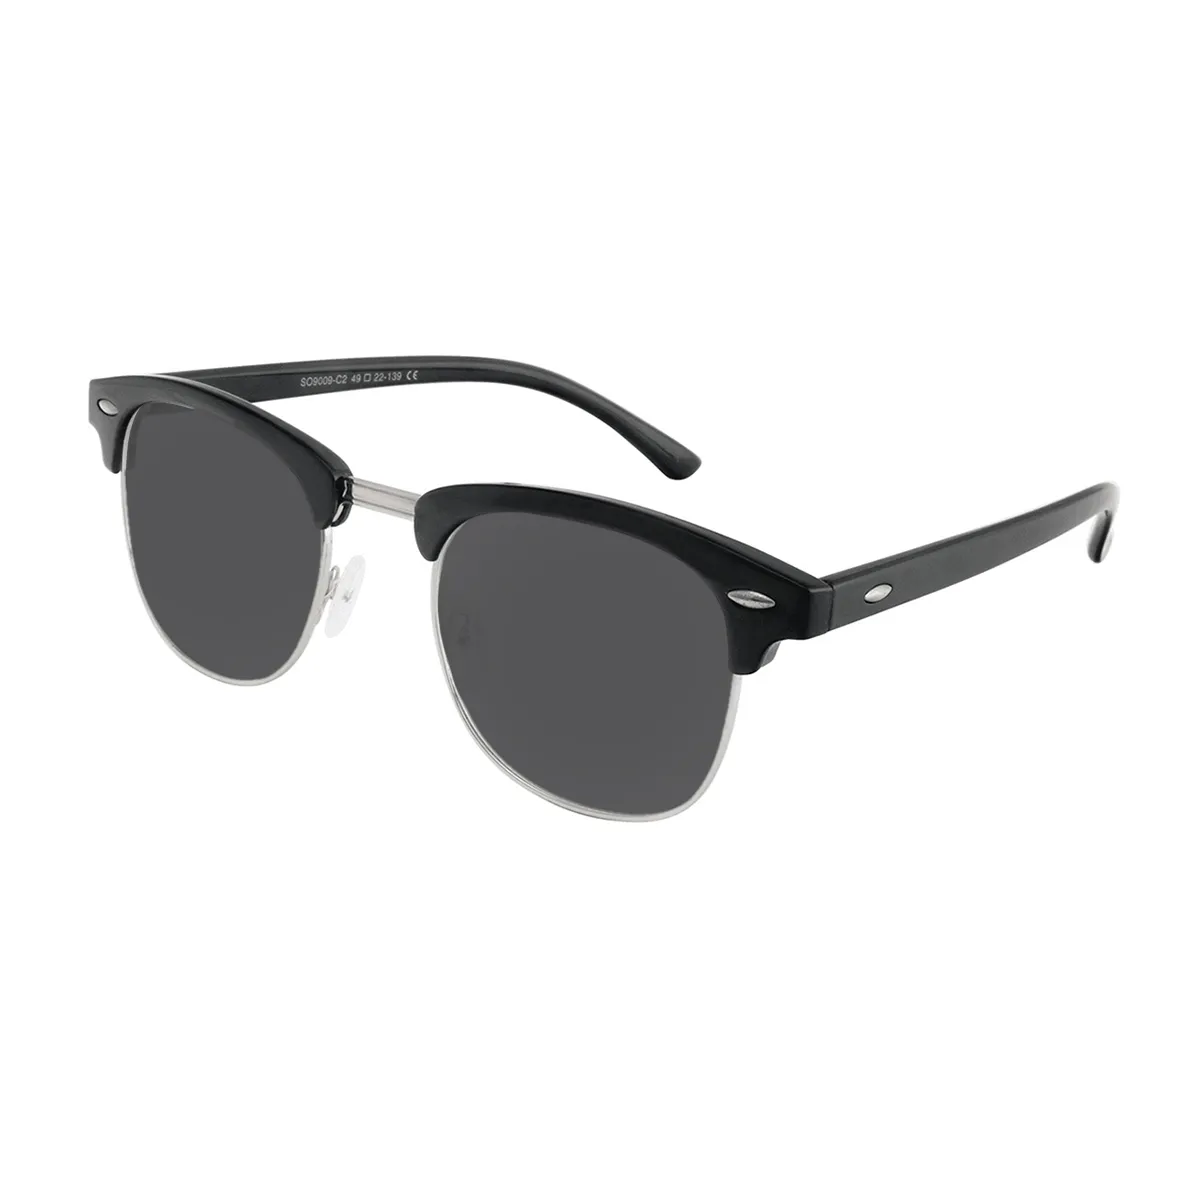 Napier - Browline Black Sunglasses for Men & Women